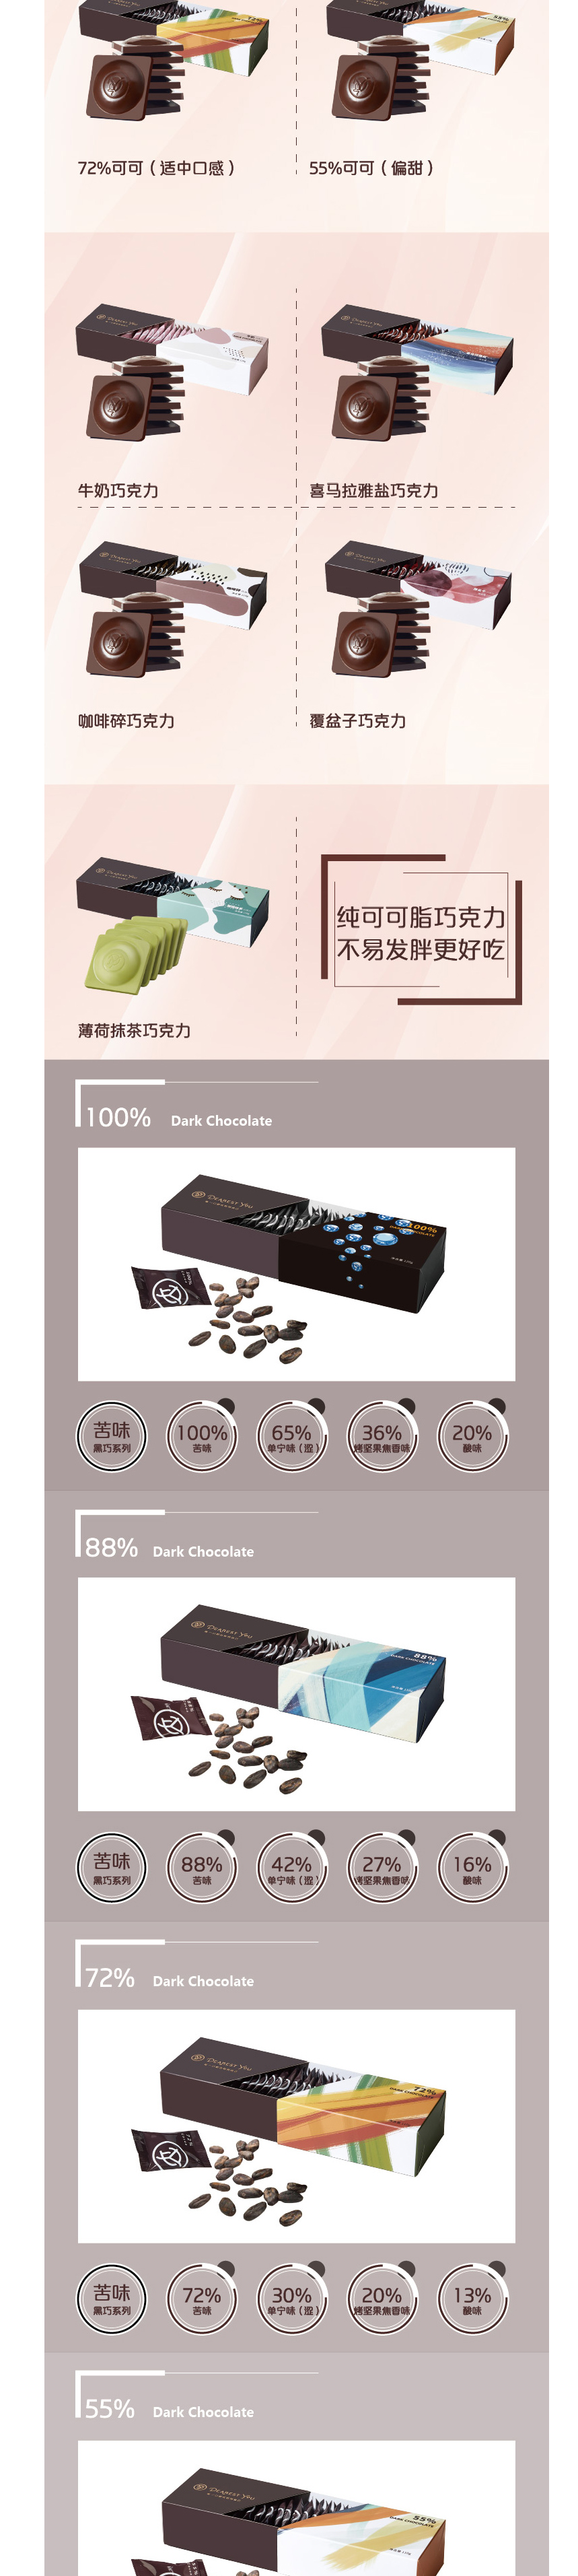 DY純可可脂牛奶巧克力禮盒裝詳情